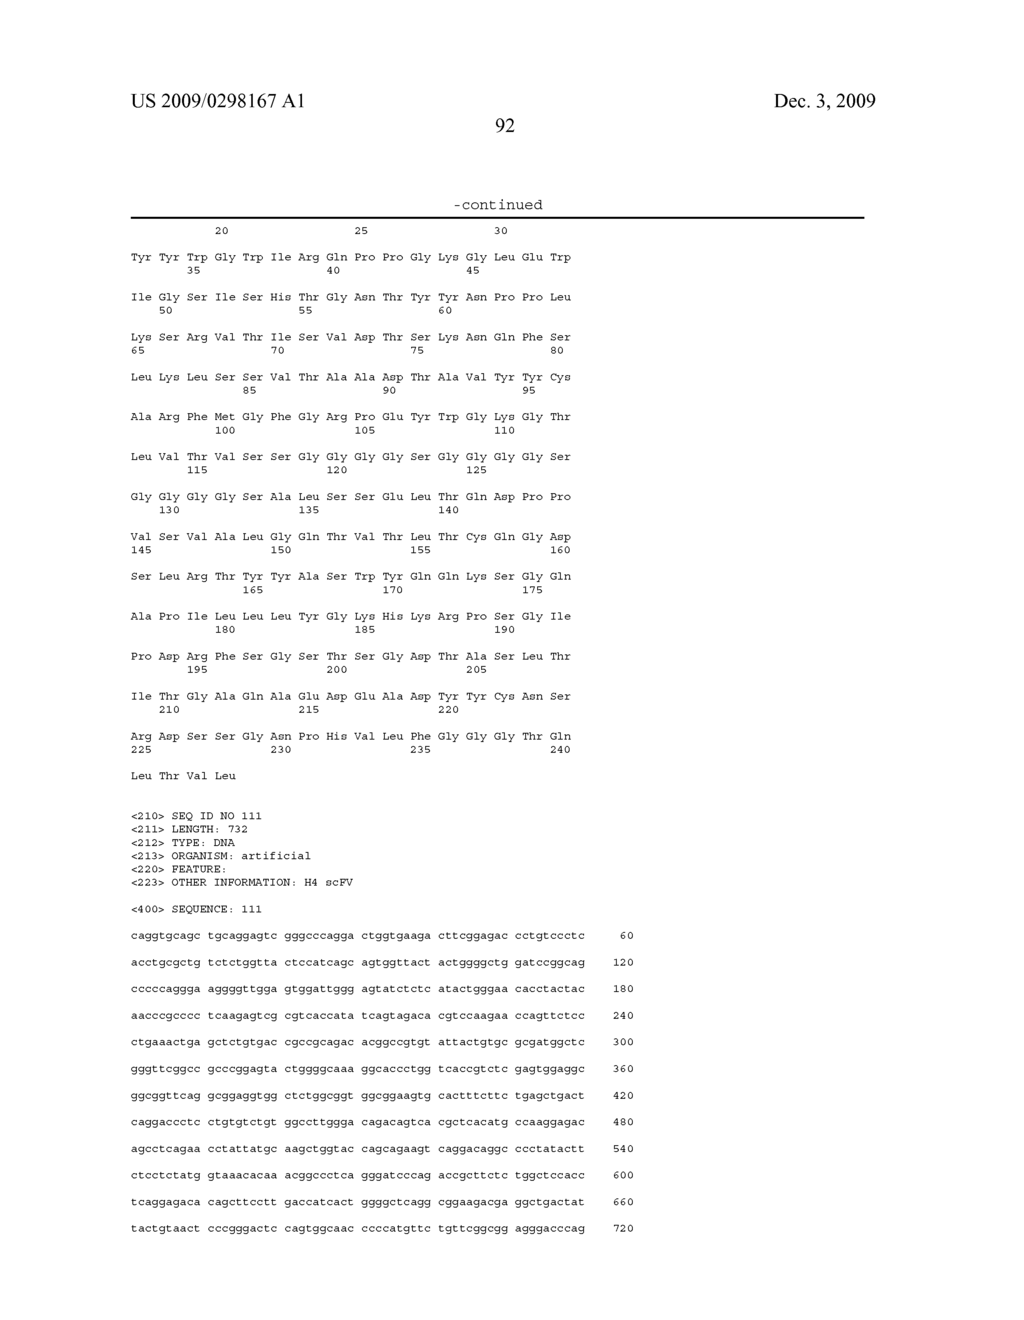 INTERLEUKIN-21 RECEPTOR BINDING PROTEINS - diagram, schematic, and image 186